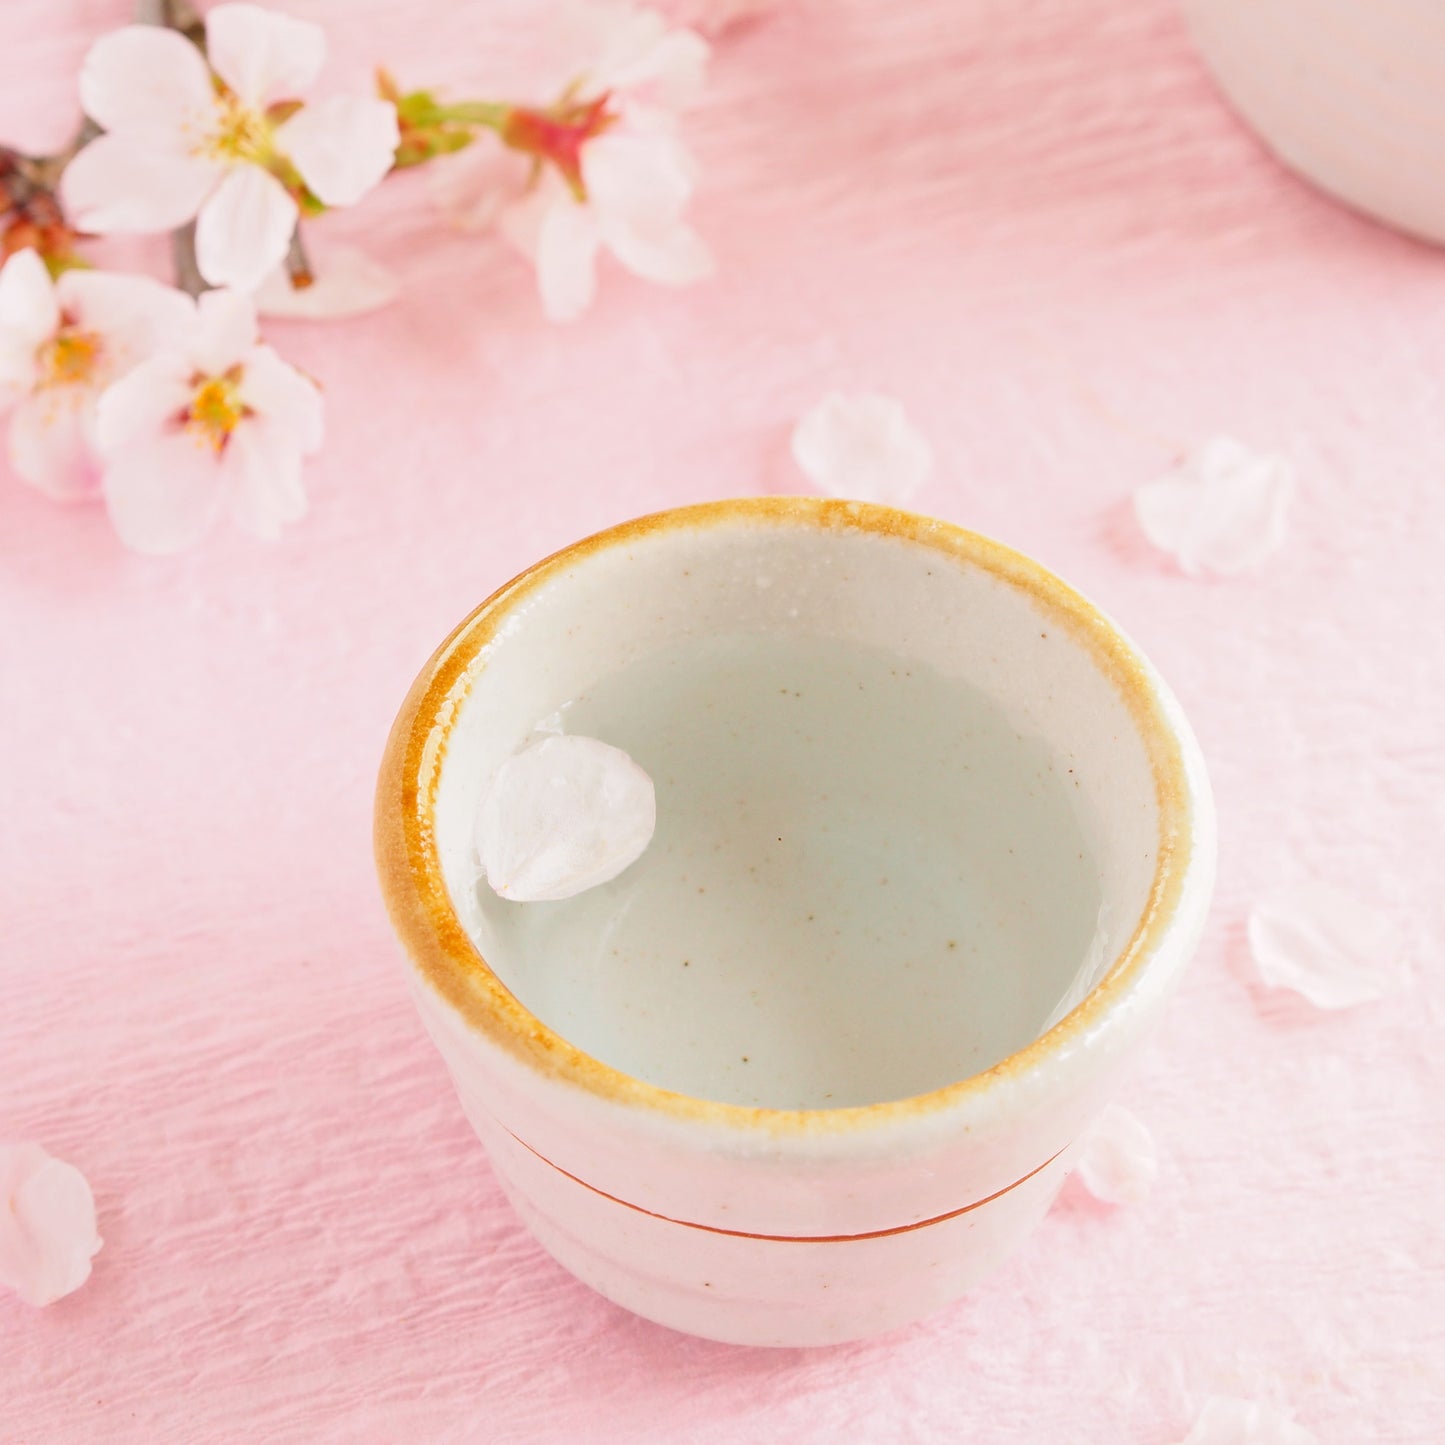 Hanamizake (Japanese sake under cherry blossoms)